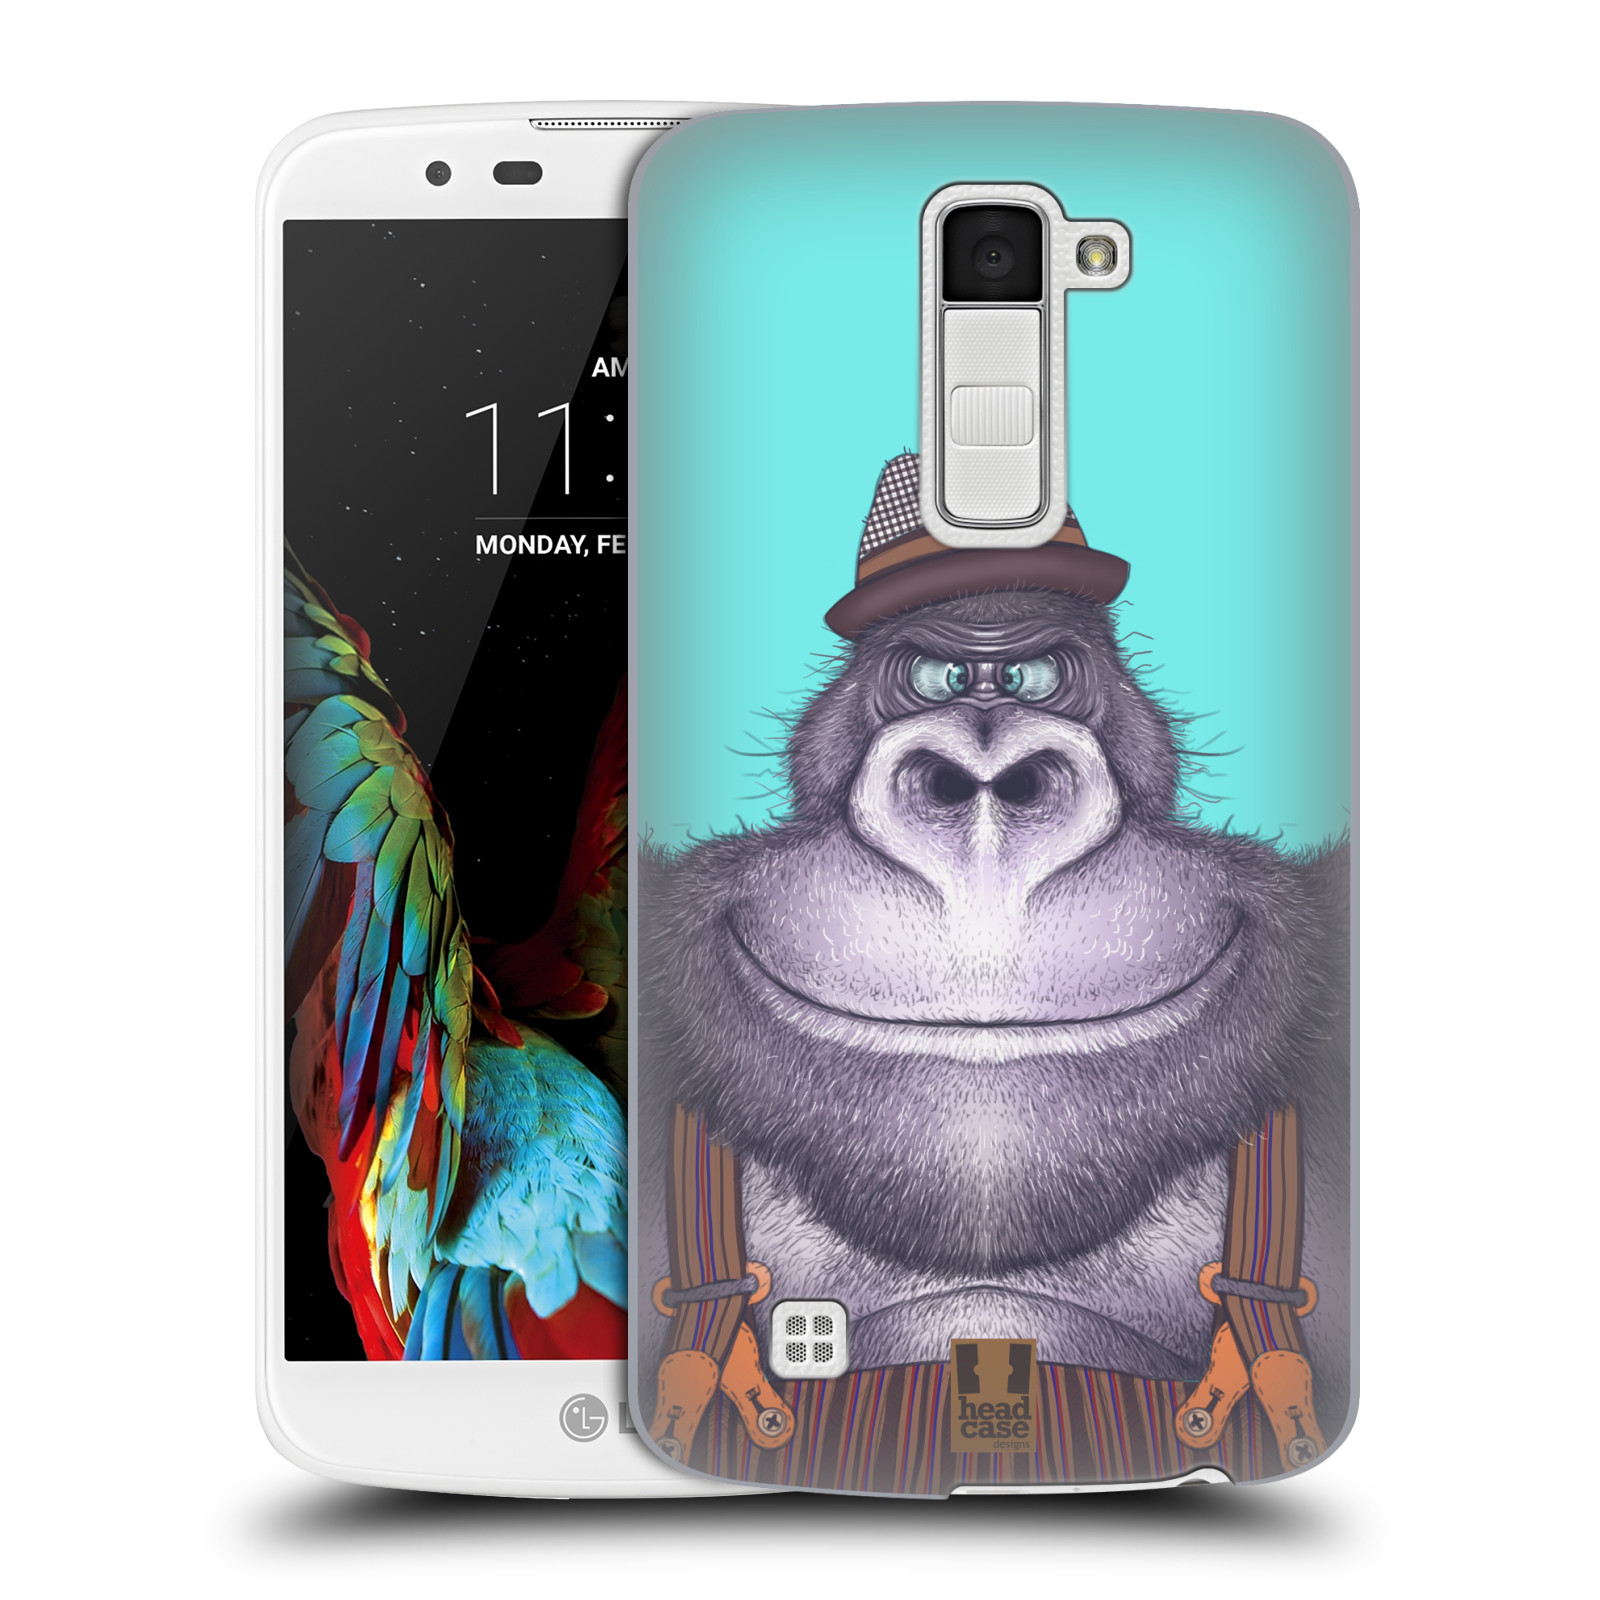 HEAD CASE plastový obal na mobil LG K10 vzor Kreslená zvířátka gorila